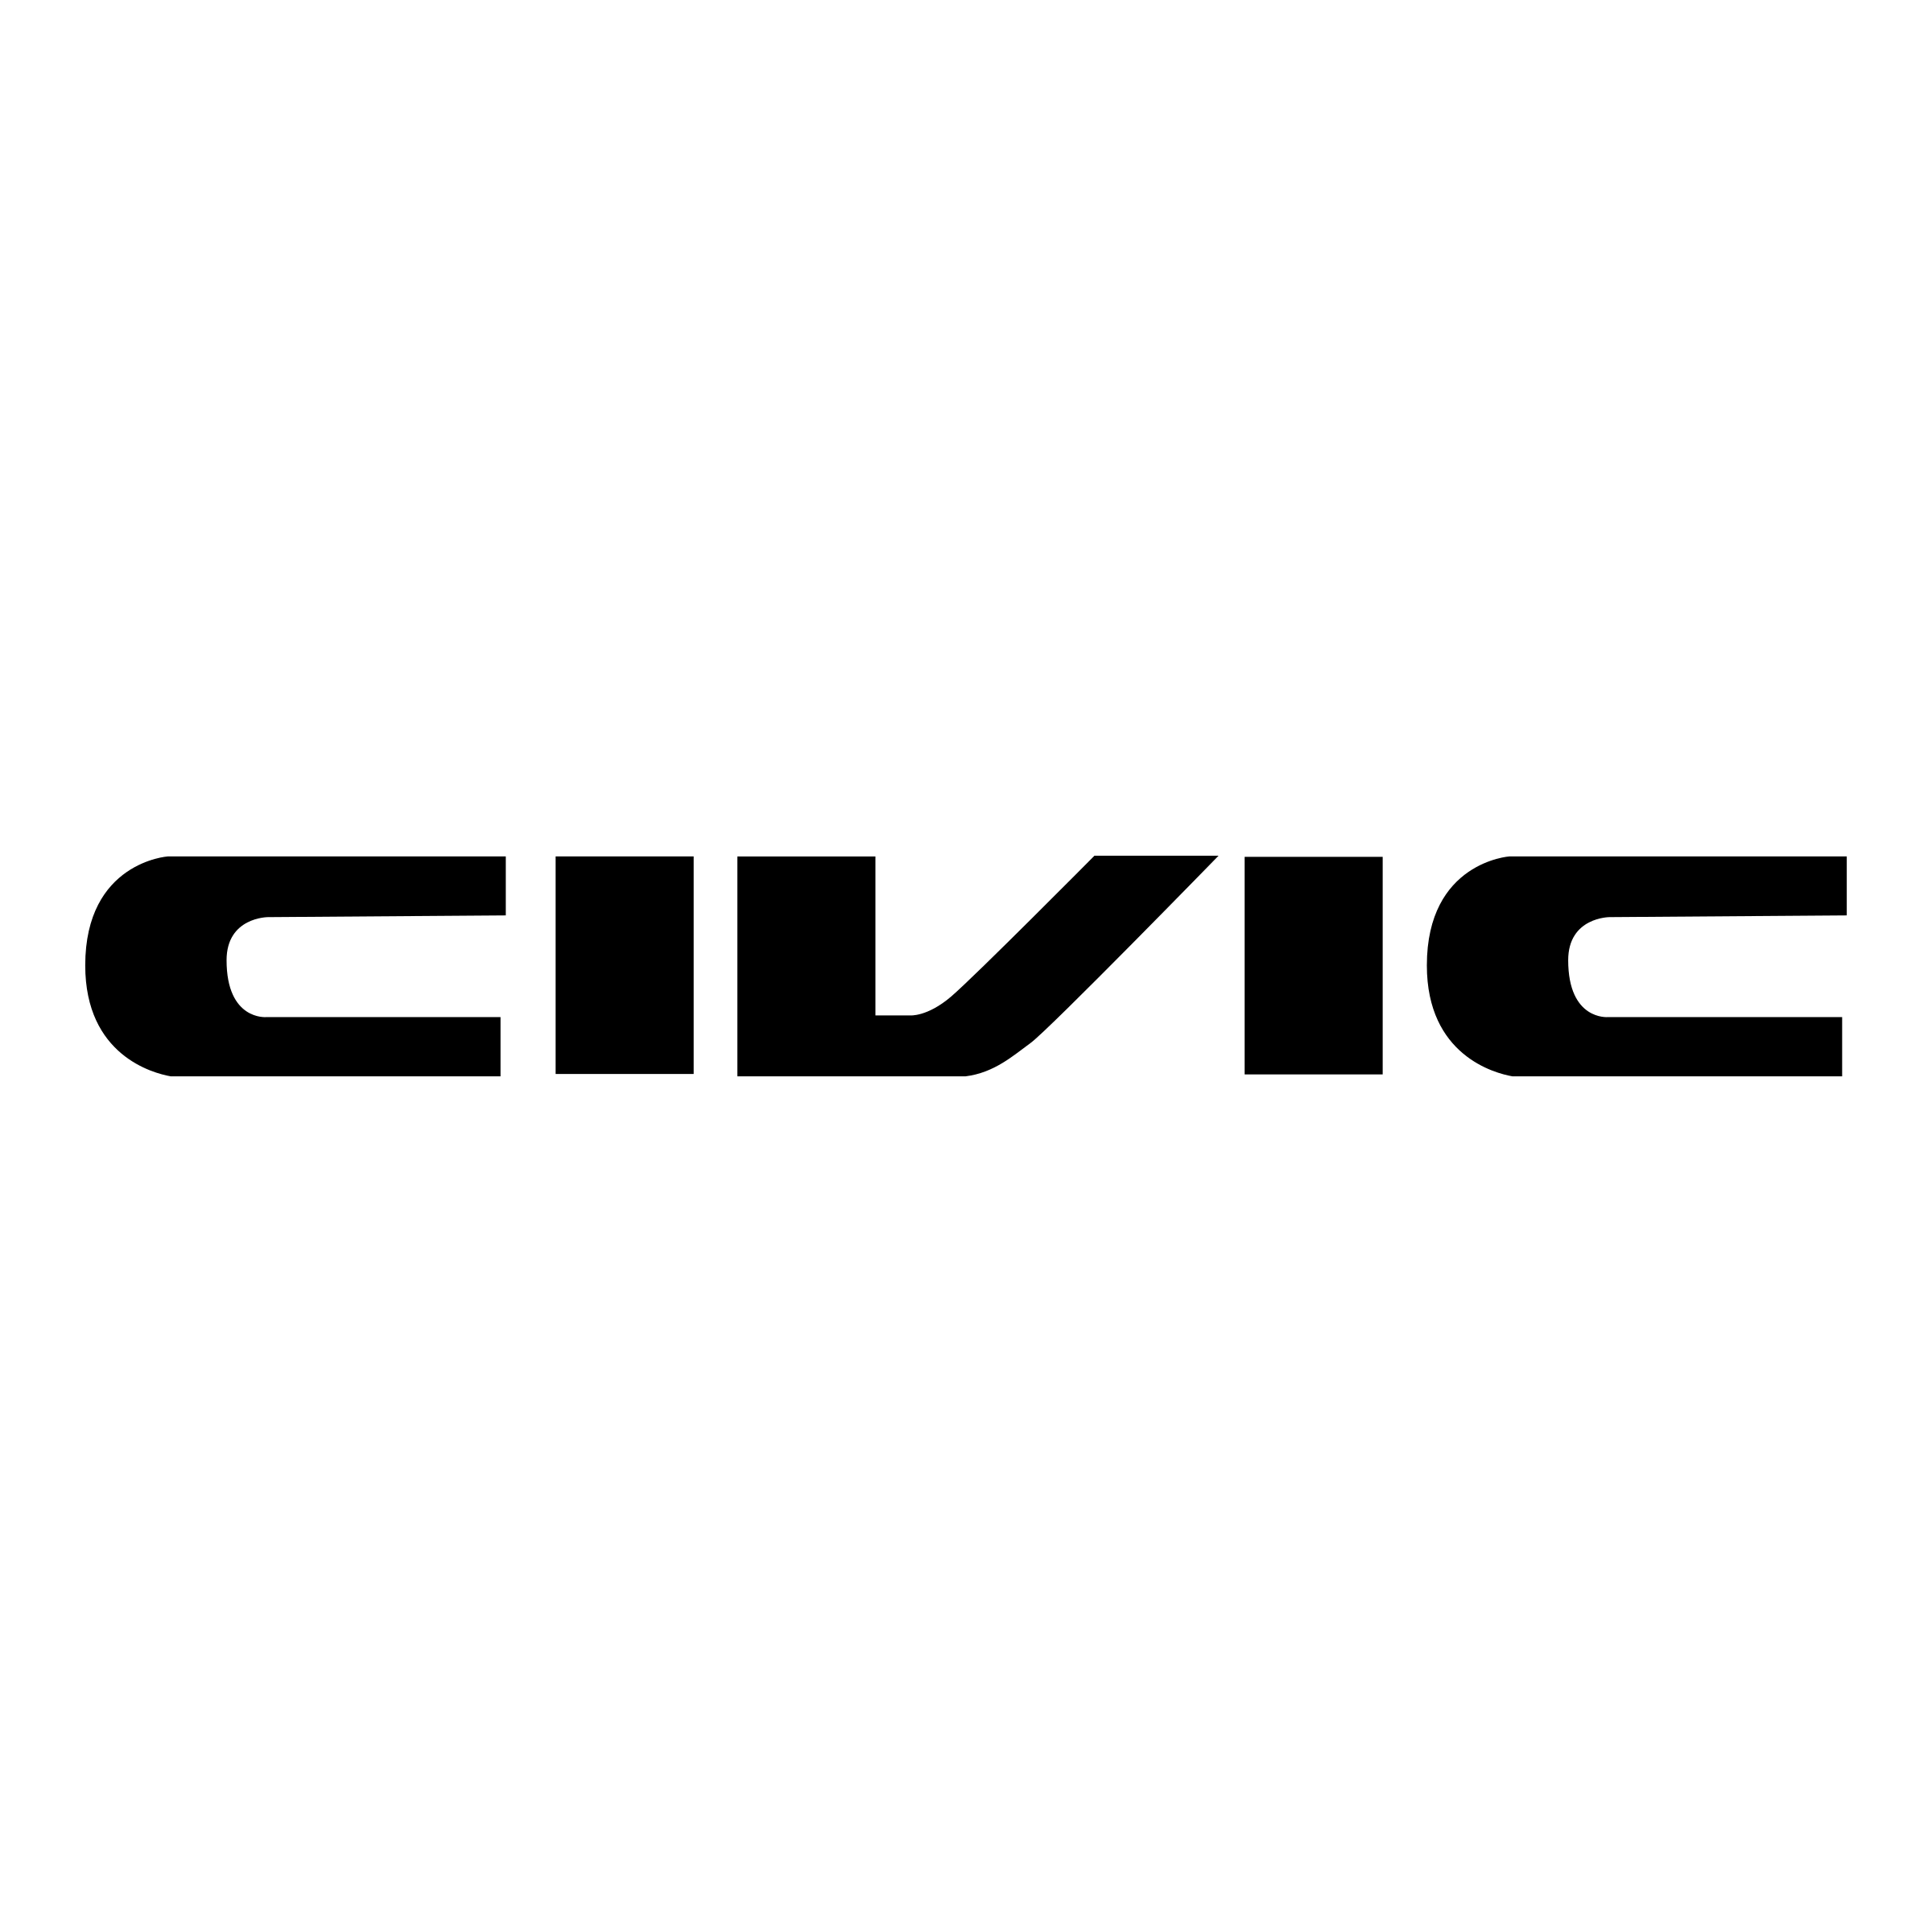 Civic Logo - Civic Logo PNG Transparent & SVG Vector